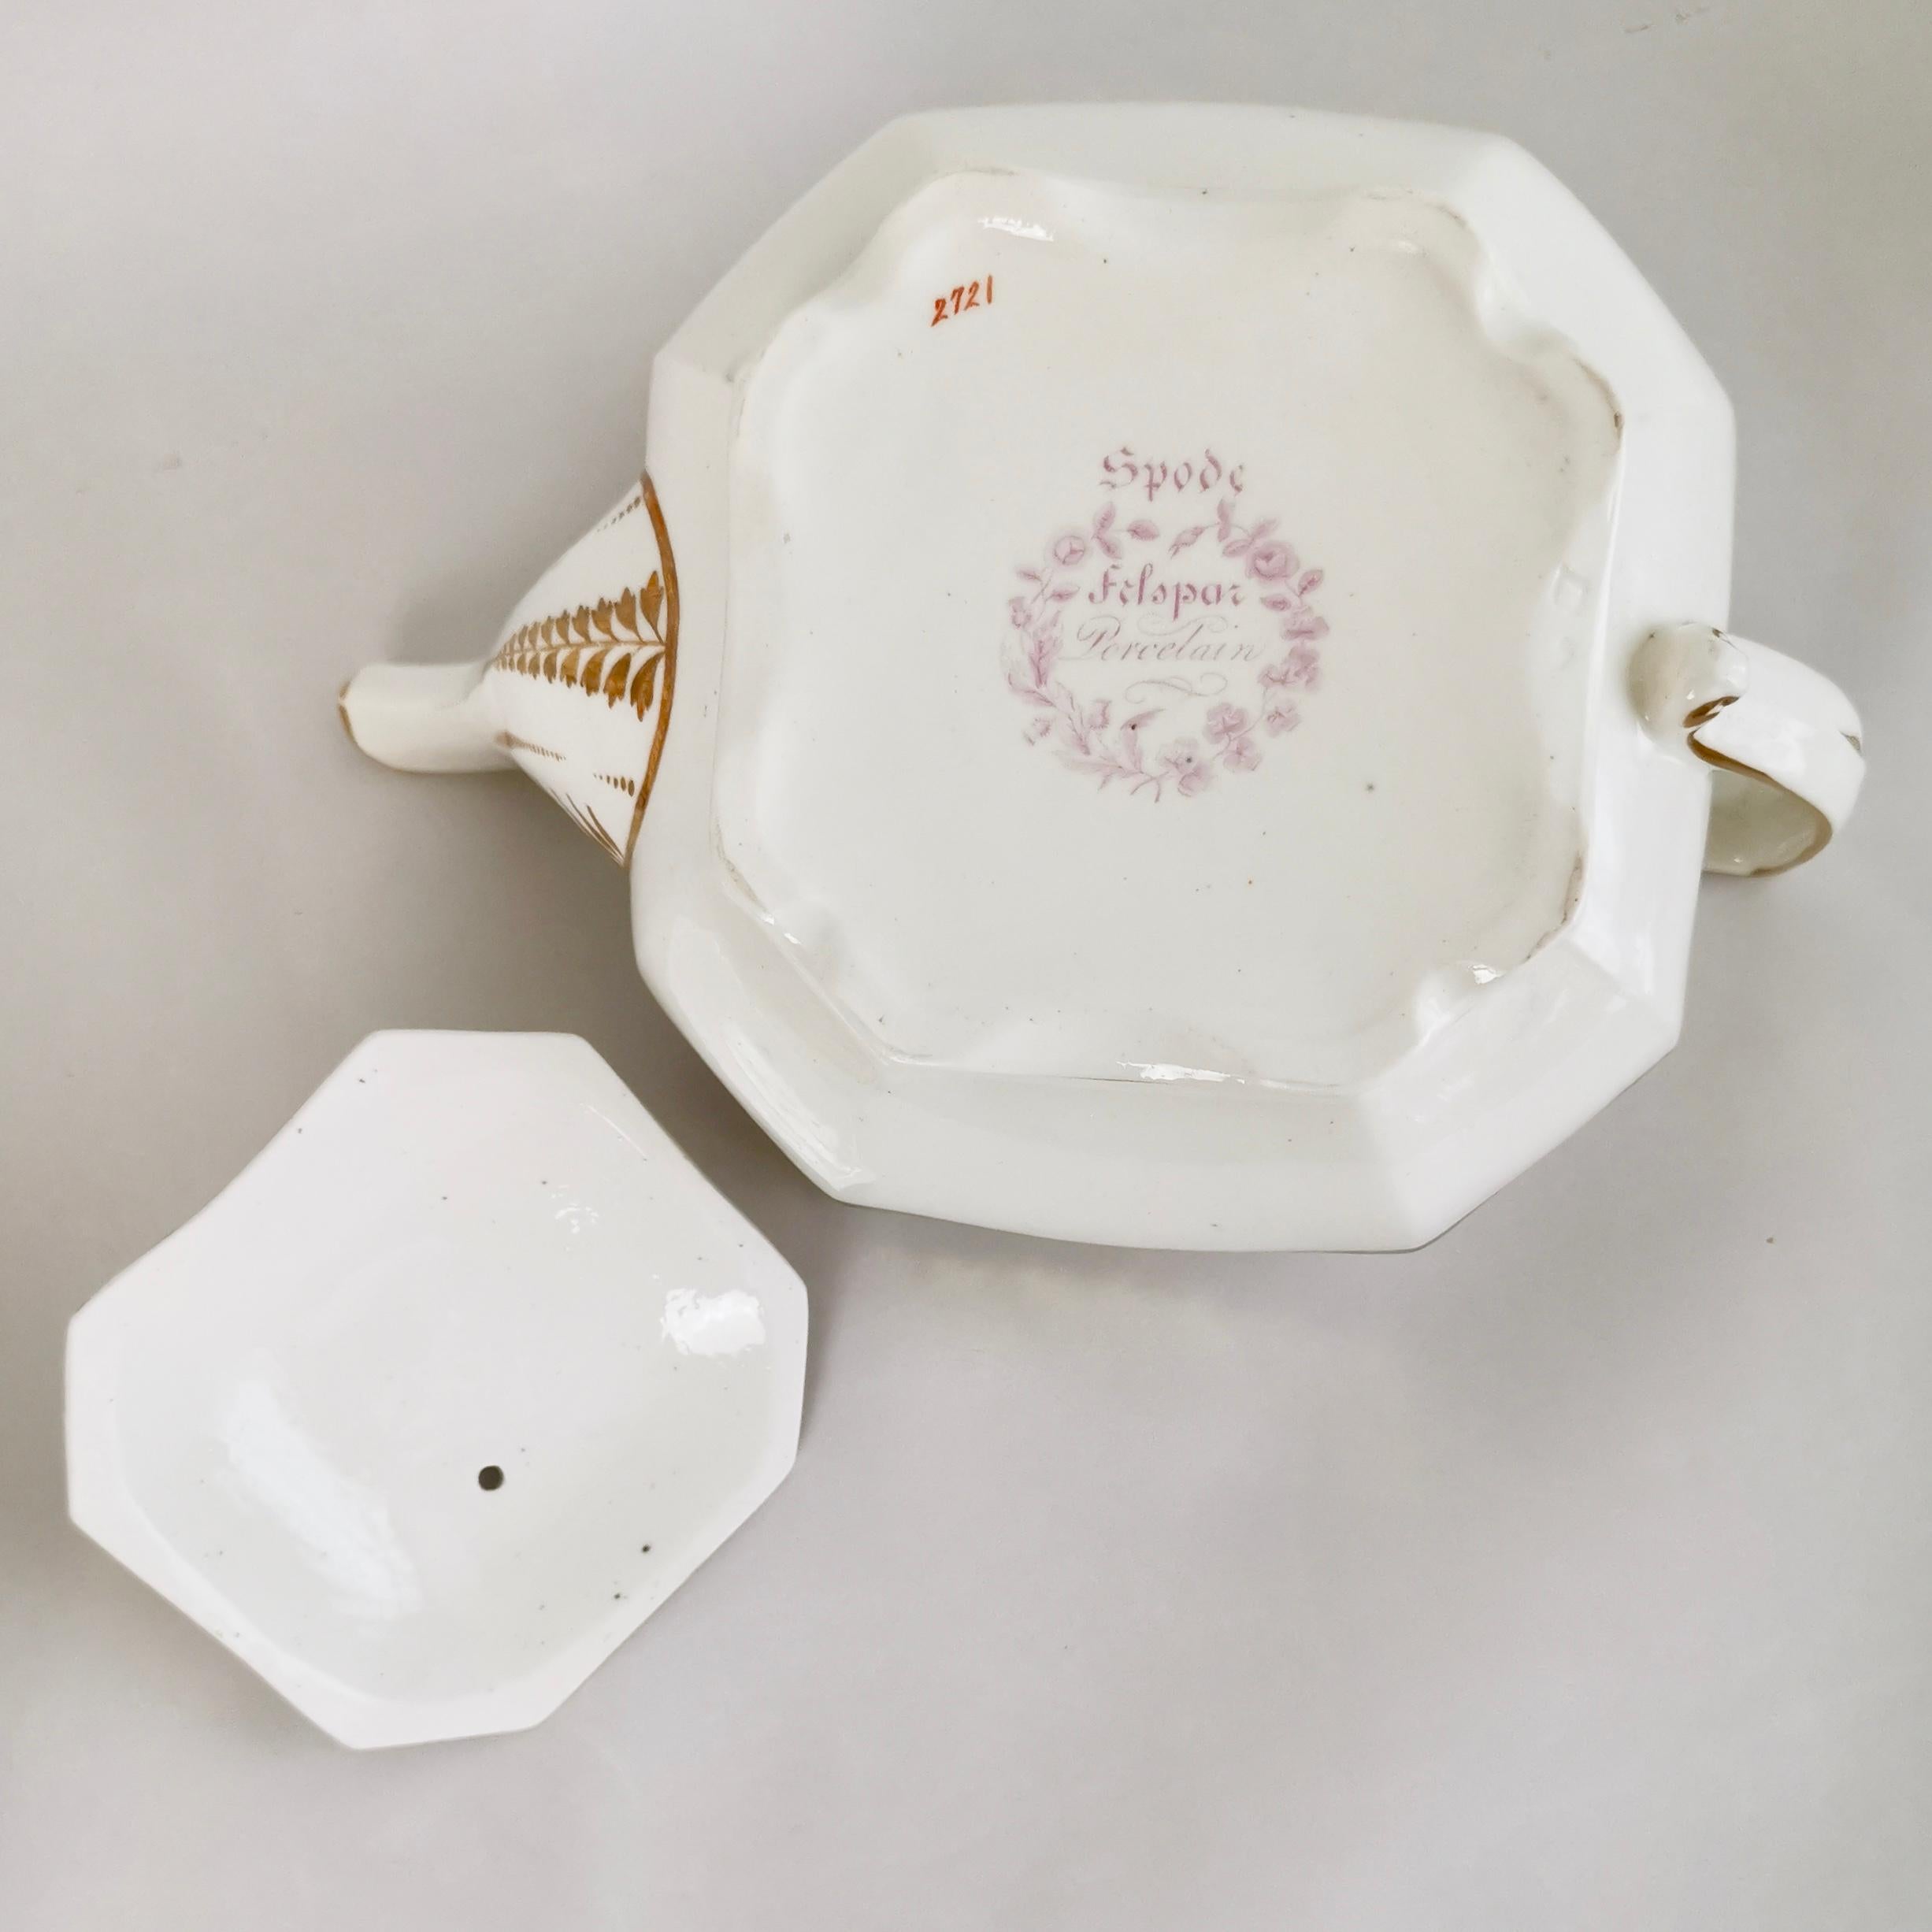 Early 19th Century Spode Tea Service, Felspar Porcelain White and Cobalt Blue, Regency 1821-1825